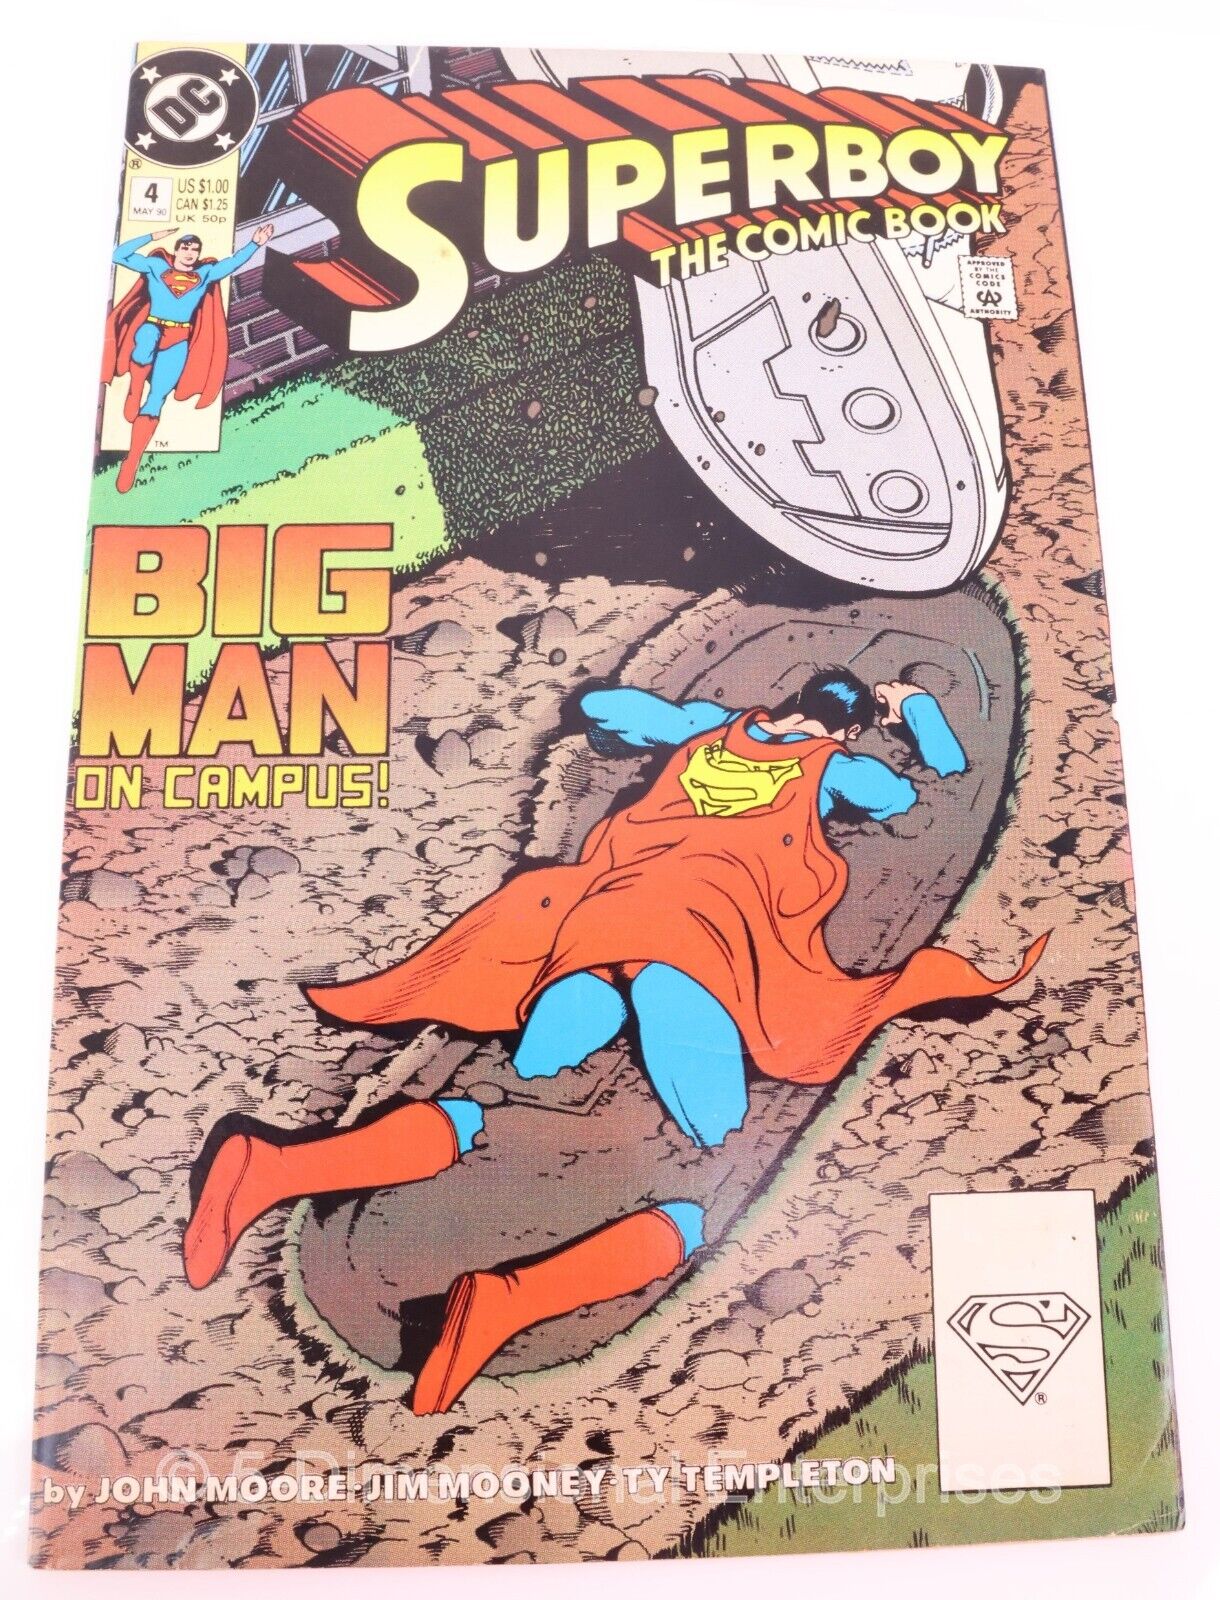 SUPERBOY: THE COMIC BOOK #4 (DC Comics, May 1990) VF - Moore Mooney Templeton